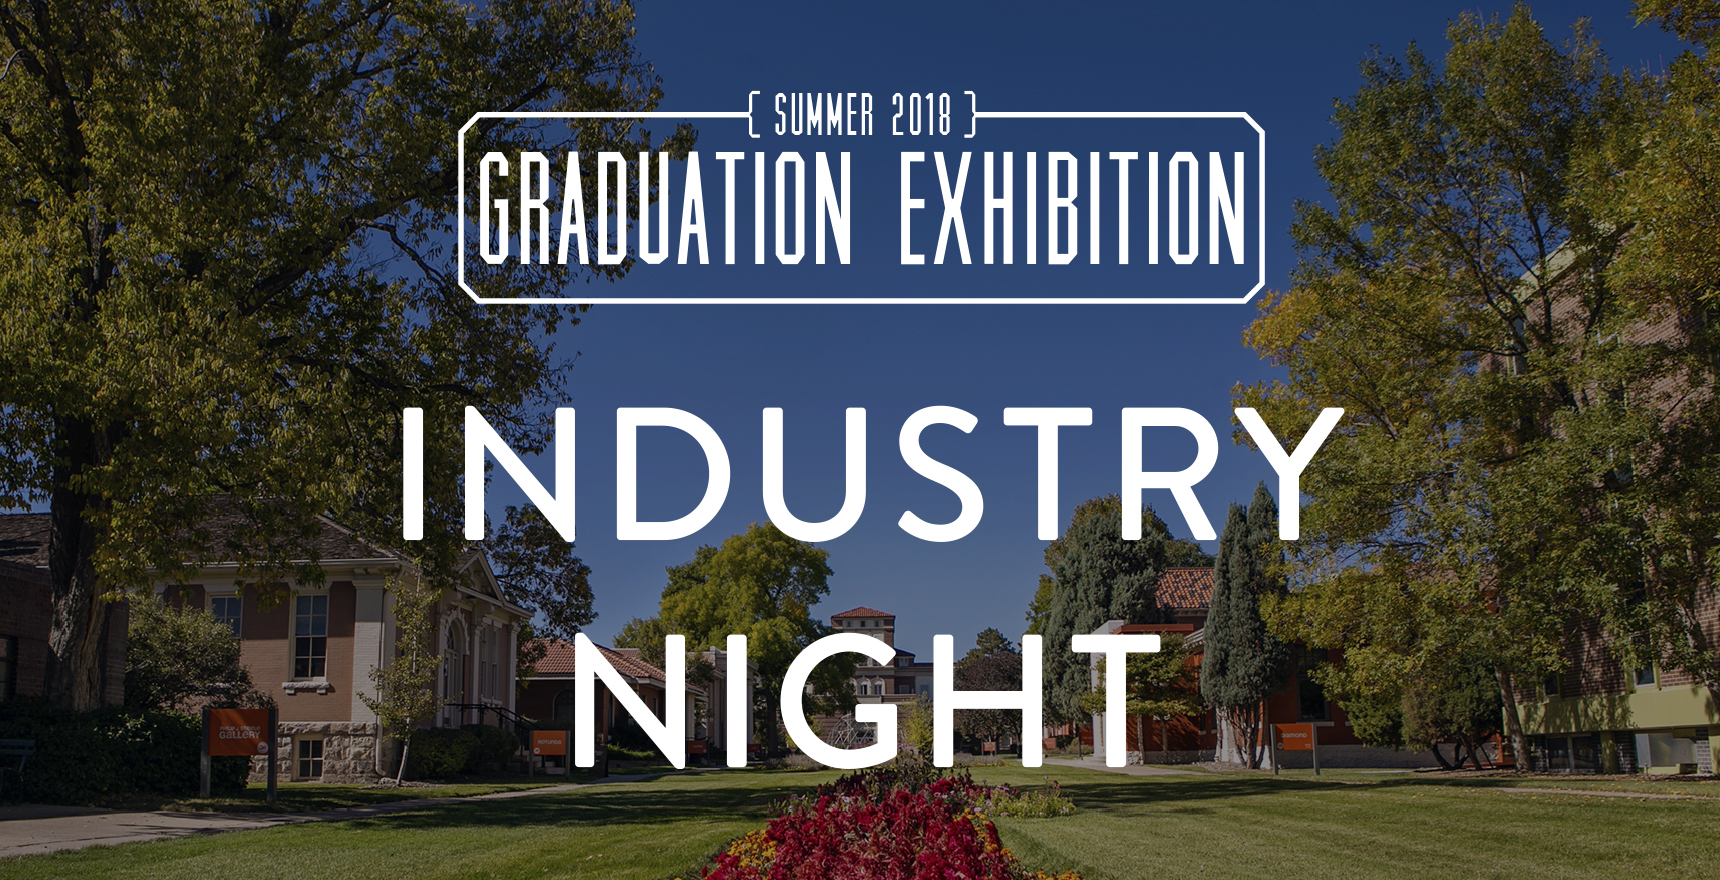 industry night graduation exhibition graphic